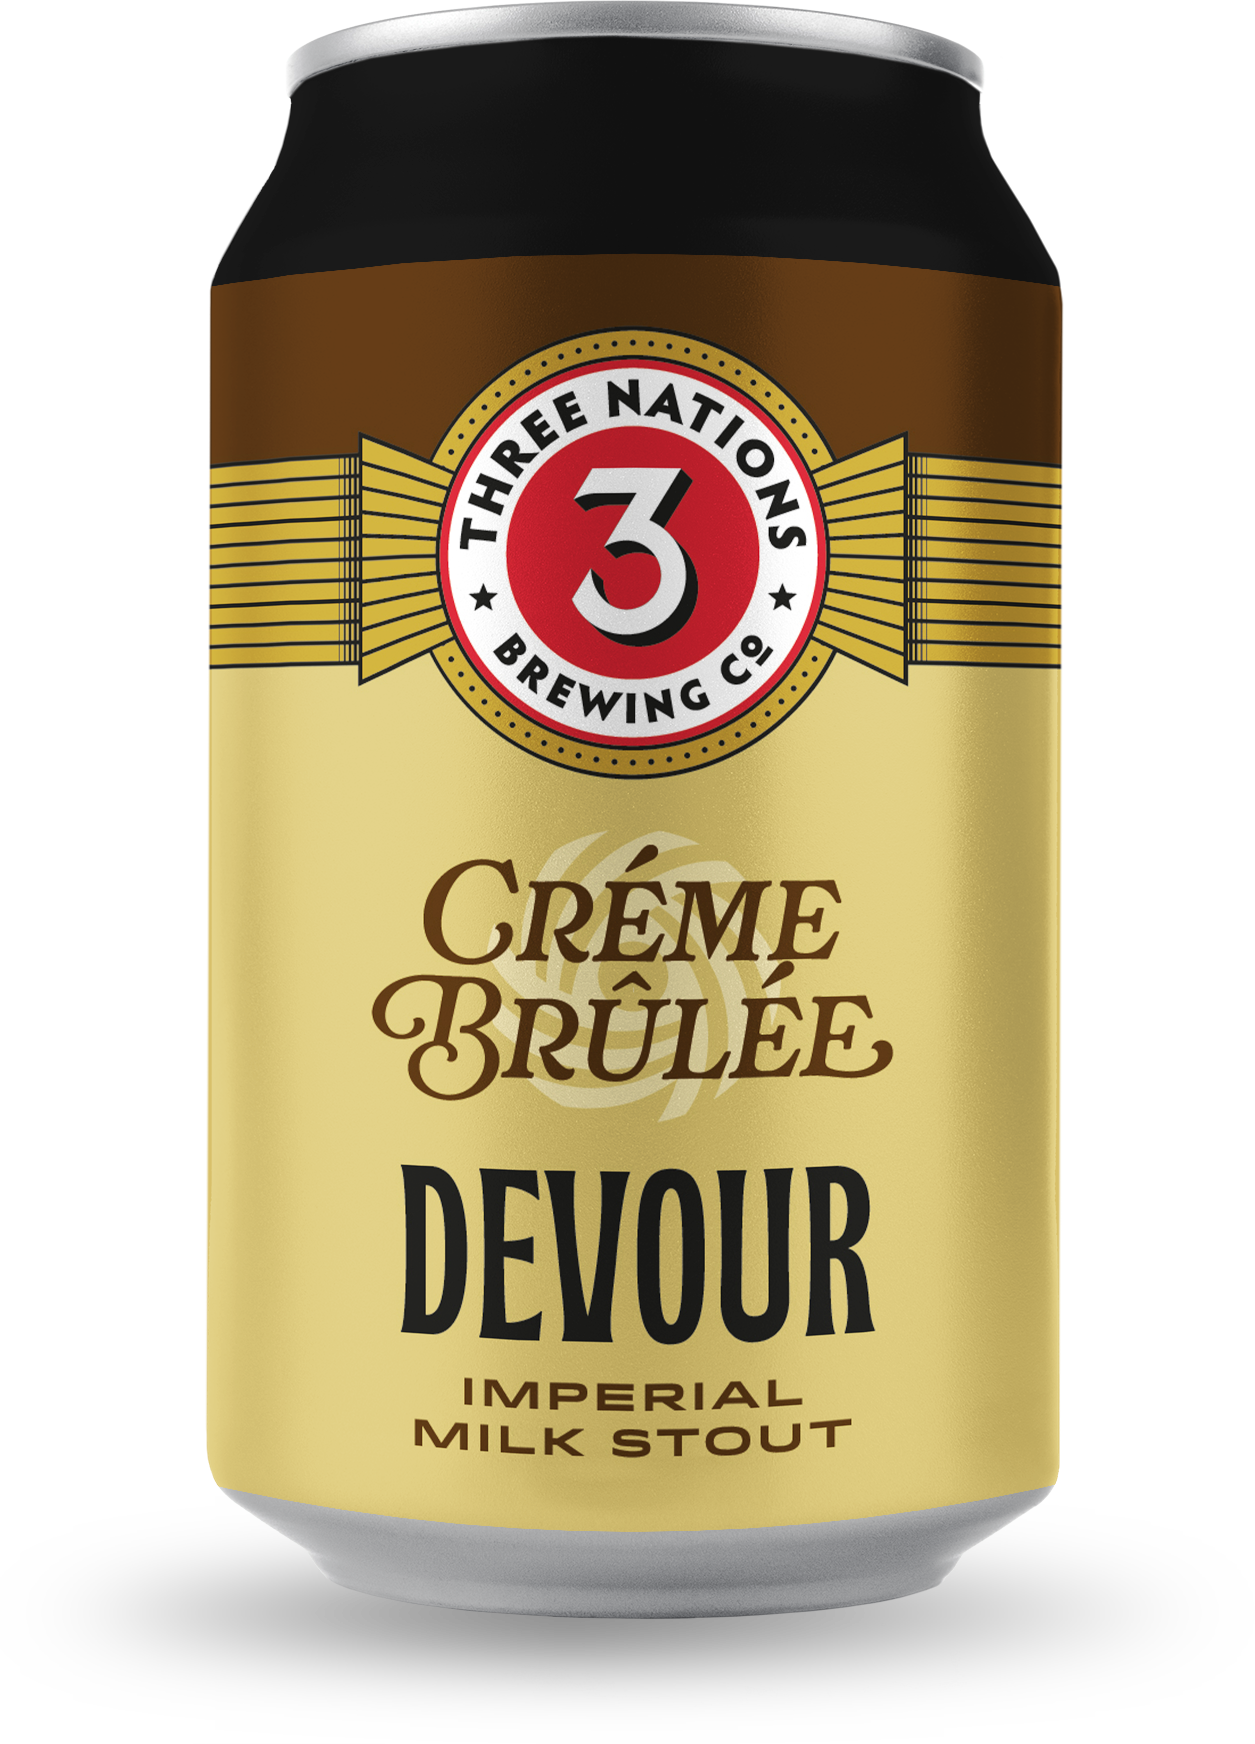 3 nations brewings creme brûlée can design